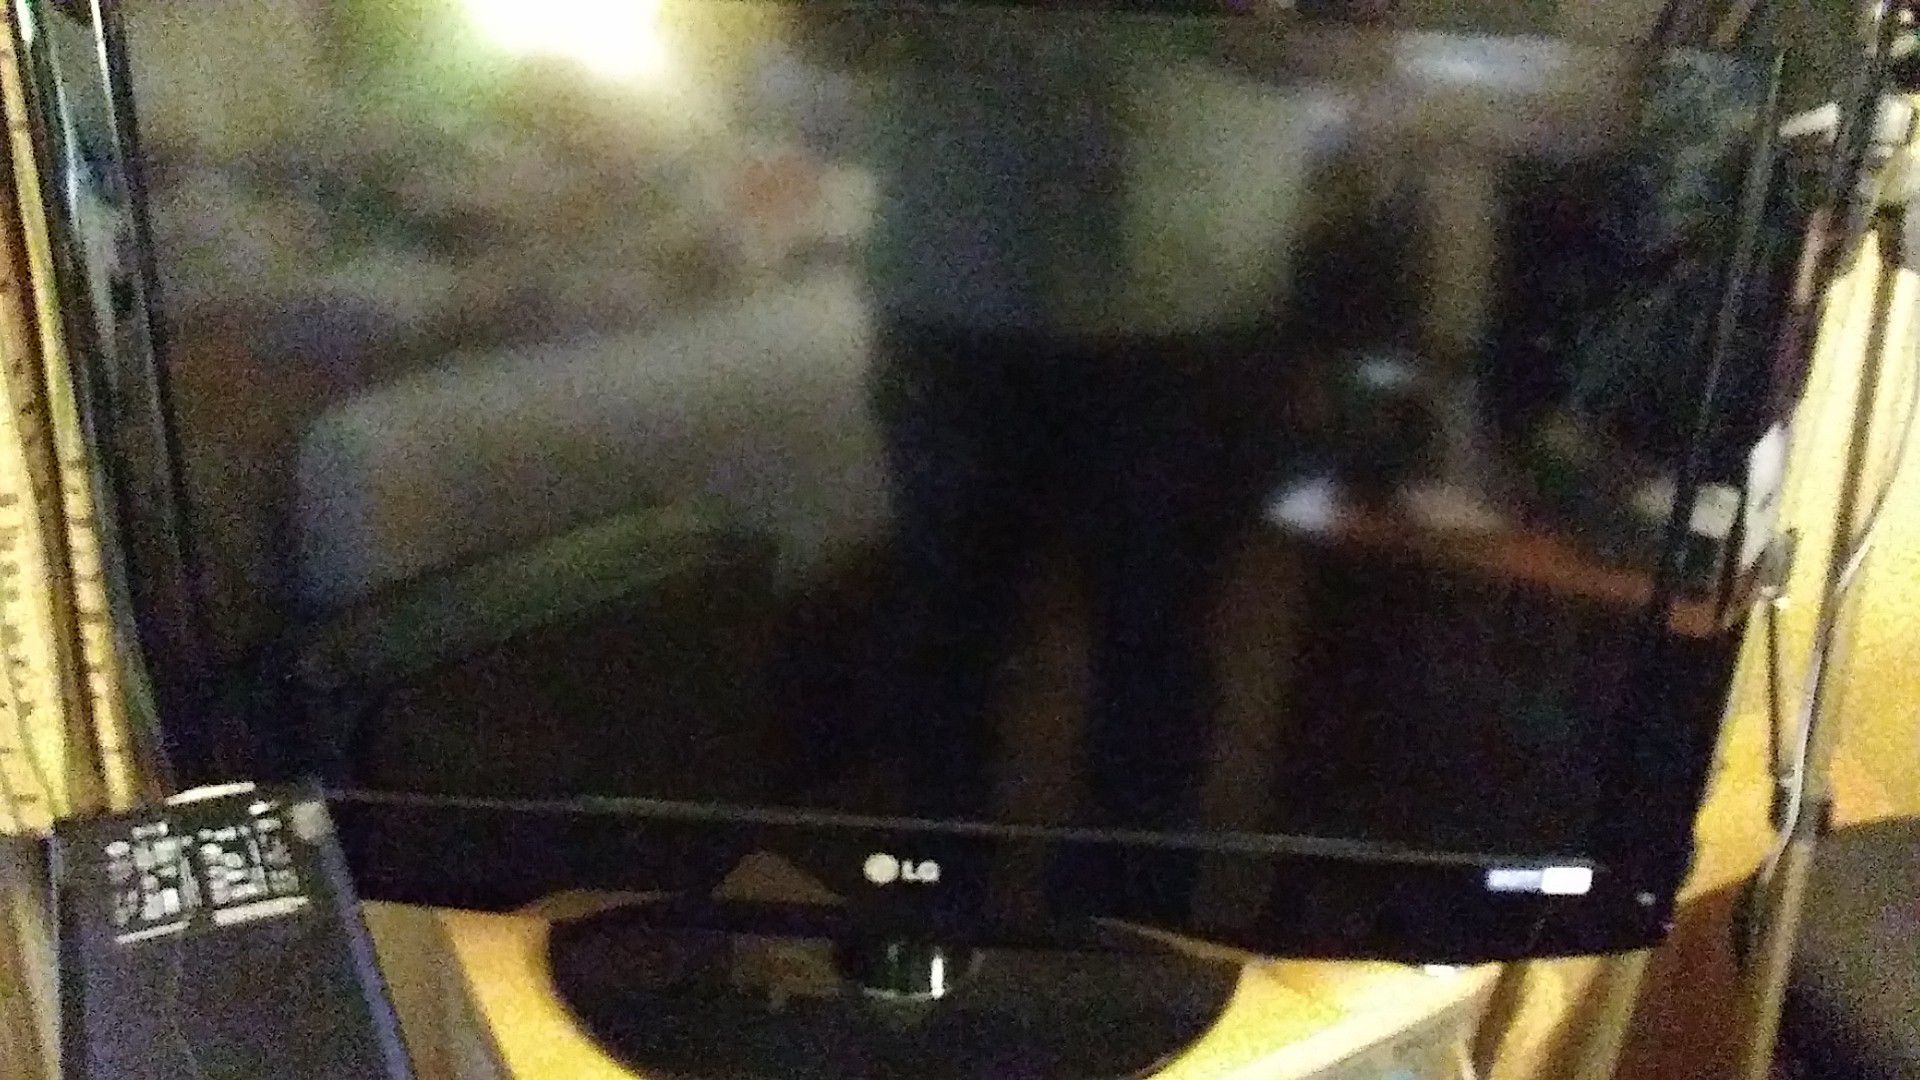 LG 36 inch Monitor.